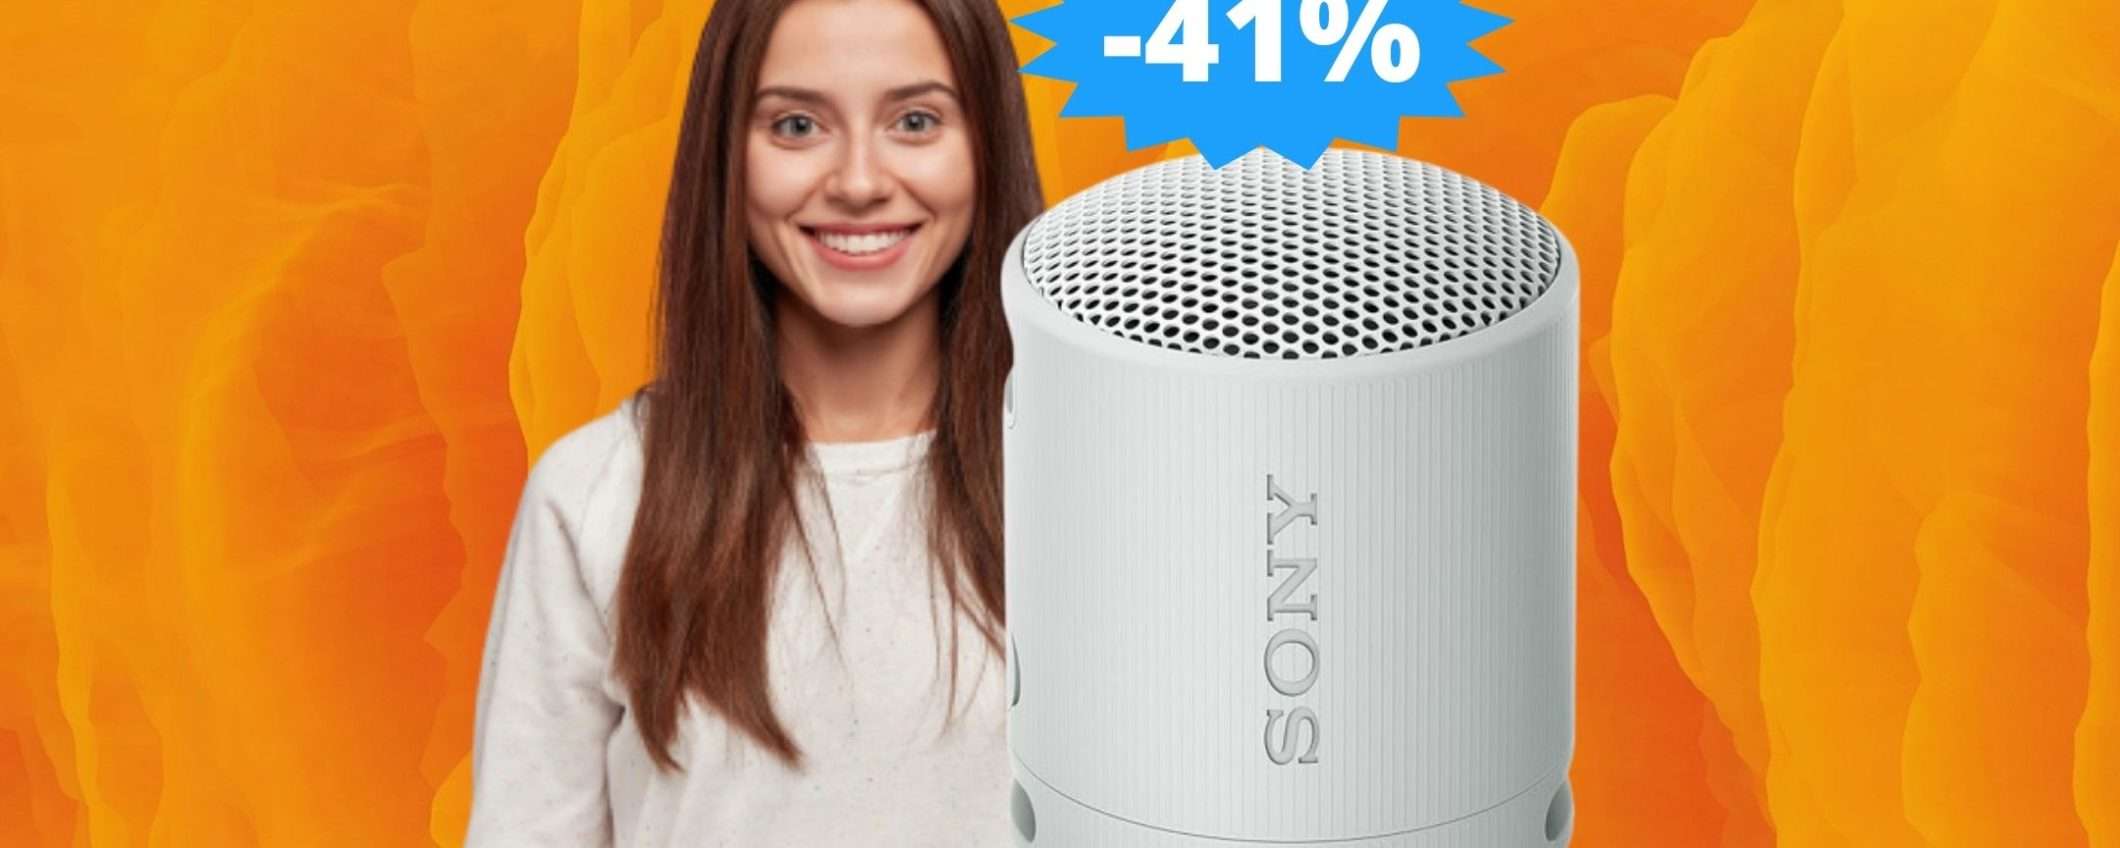 Speaker Sony SRS-XB100: la qualità audio che meriti (-41%)